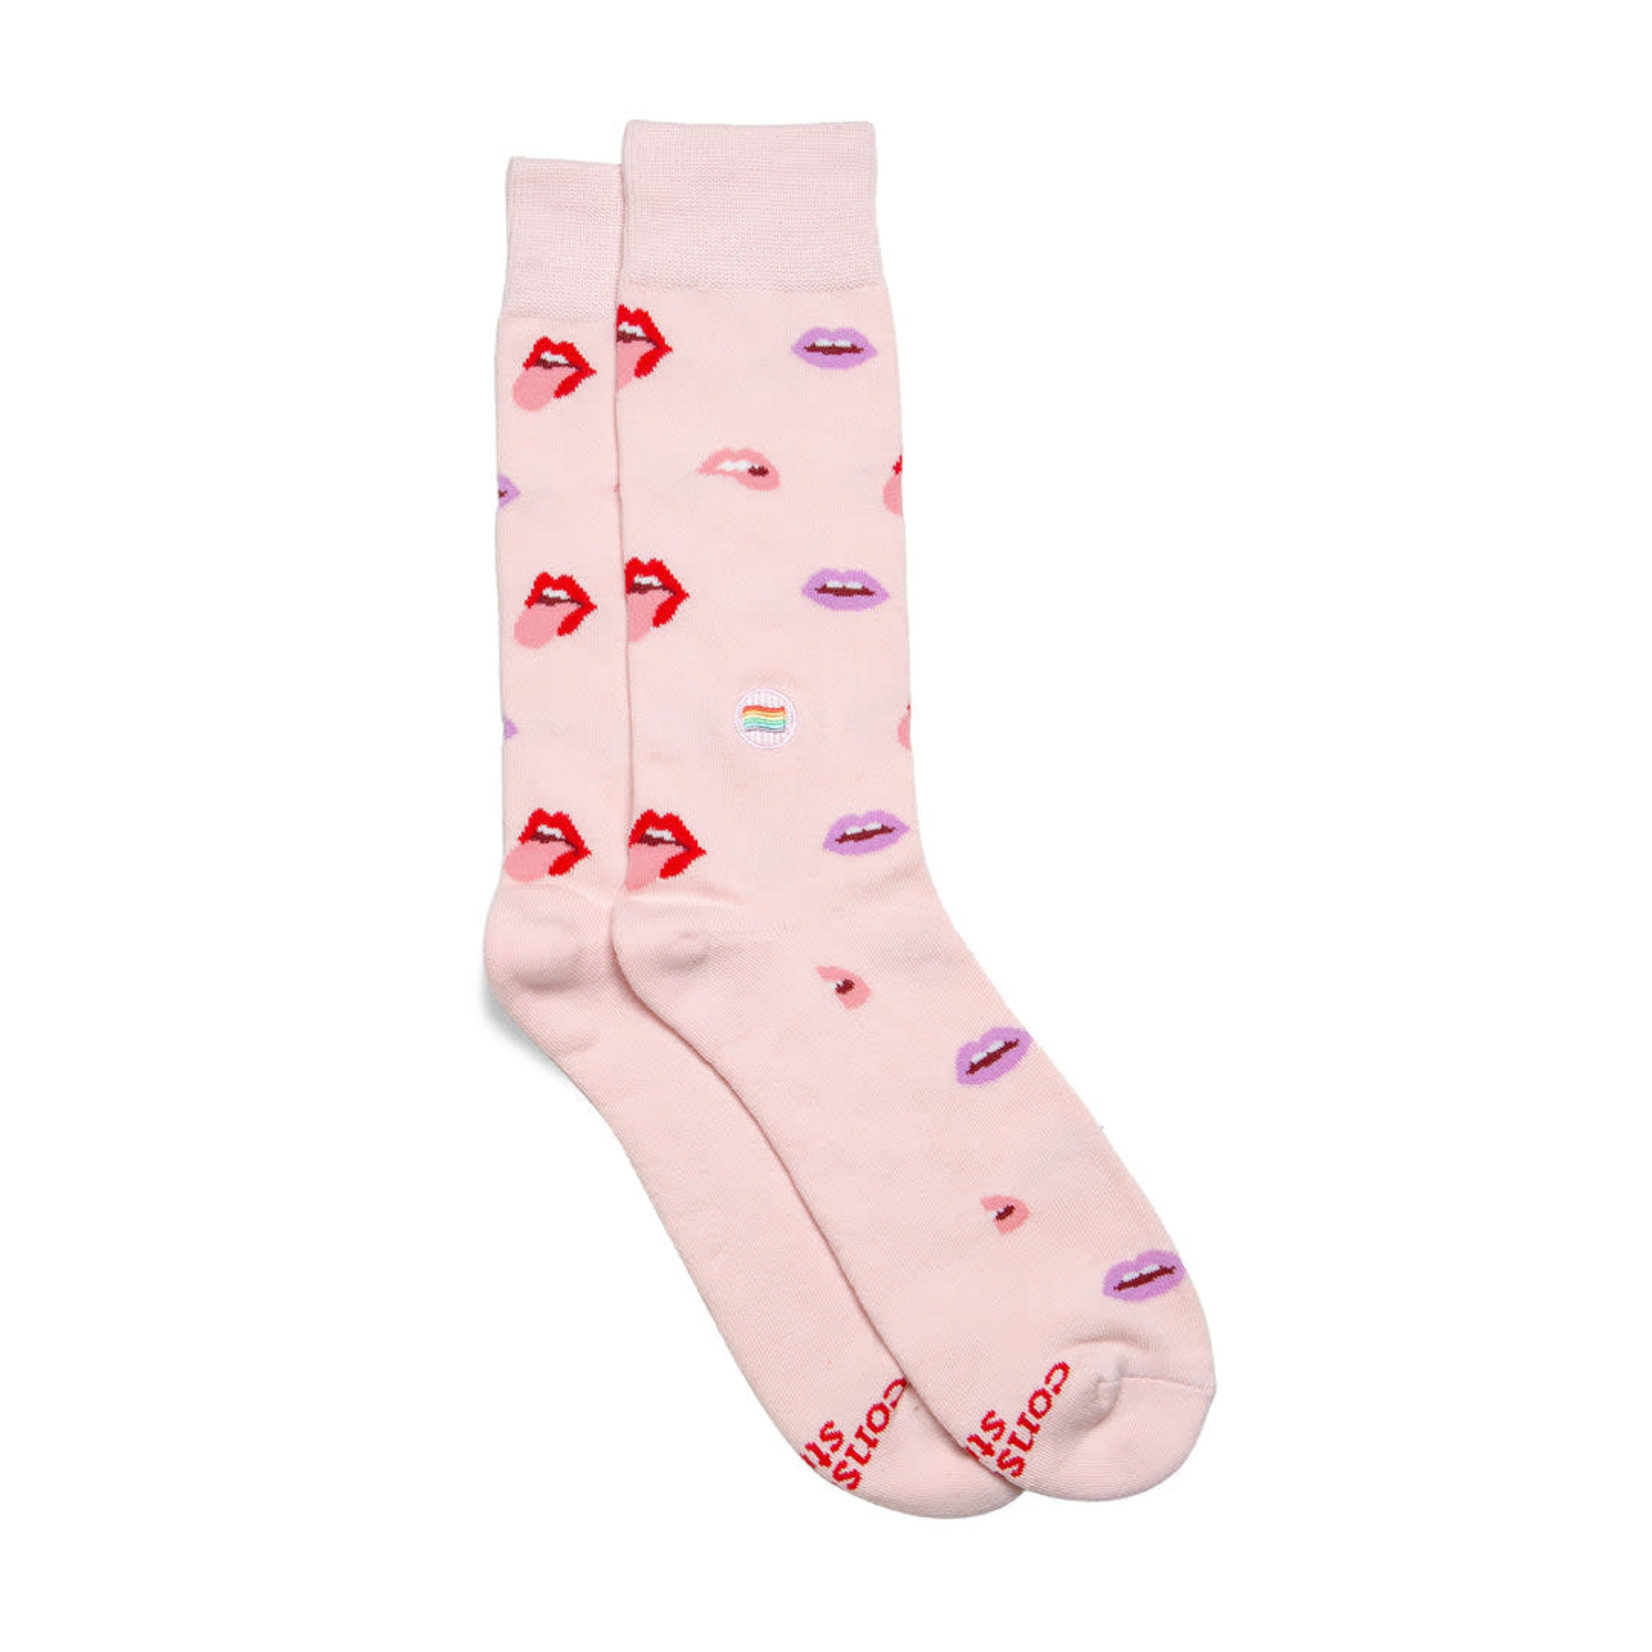 Conscious Step Conscious Step Socks that Save LGBT Lives, Pink, Medium